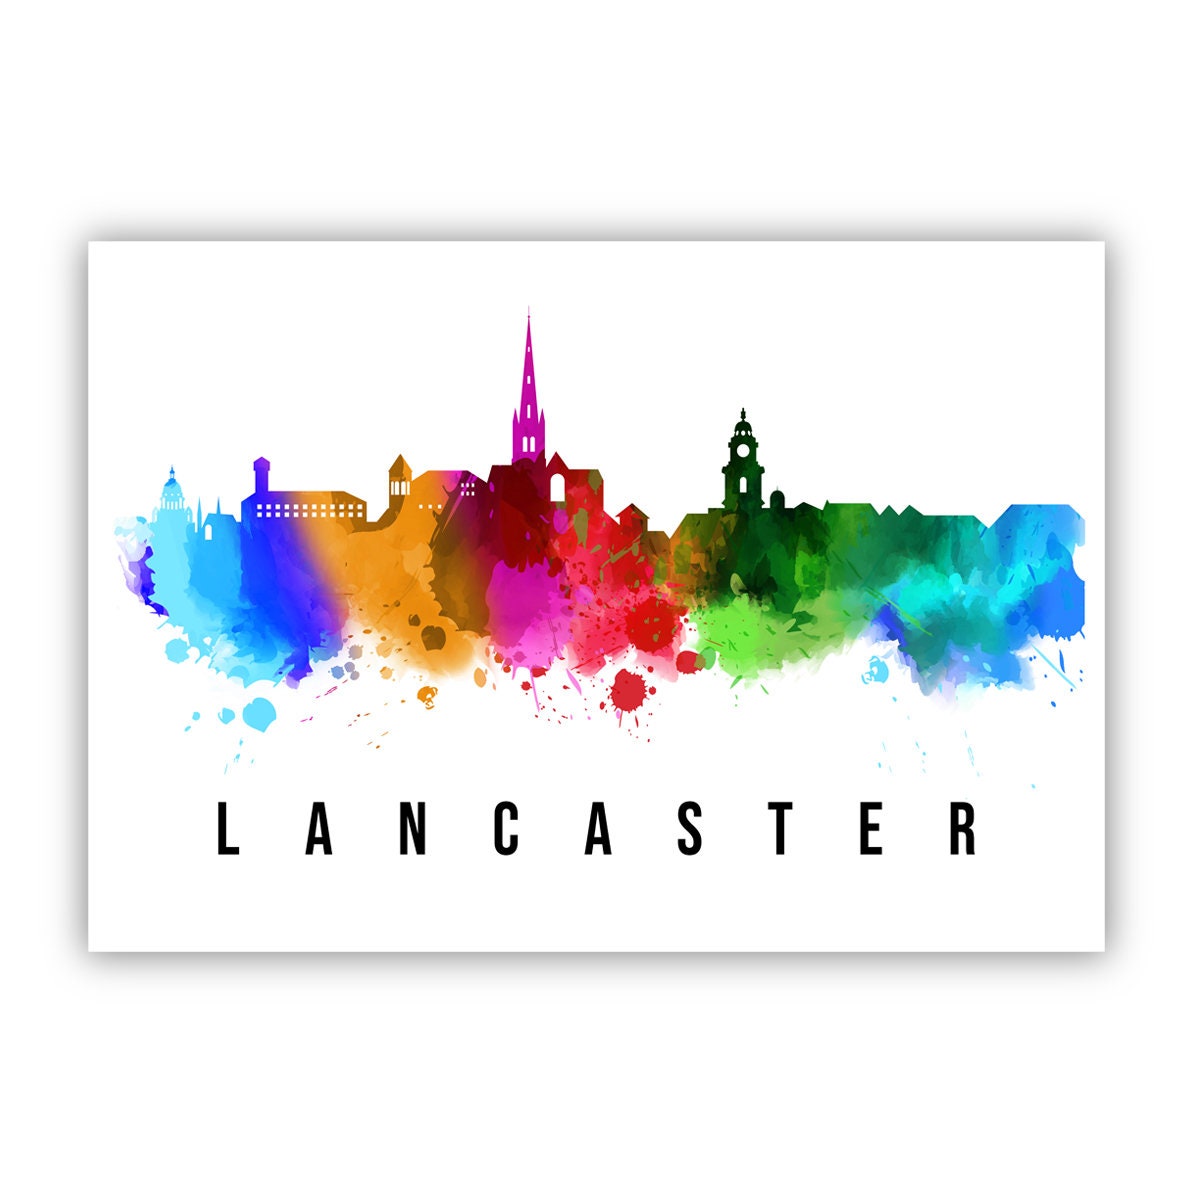 Lancaster England Poster, Skyline poster cityscape poster, Landmark City Illustration poster, Home wall decoration, Office wall art